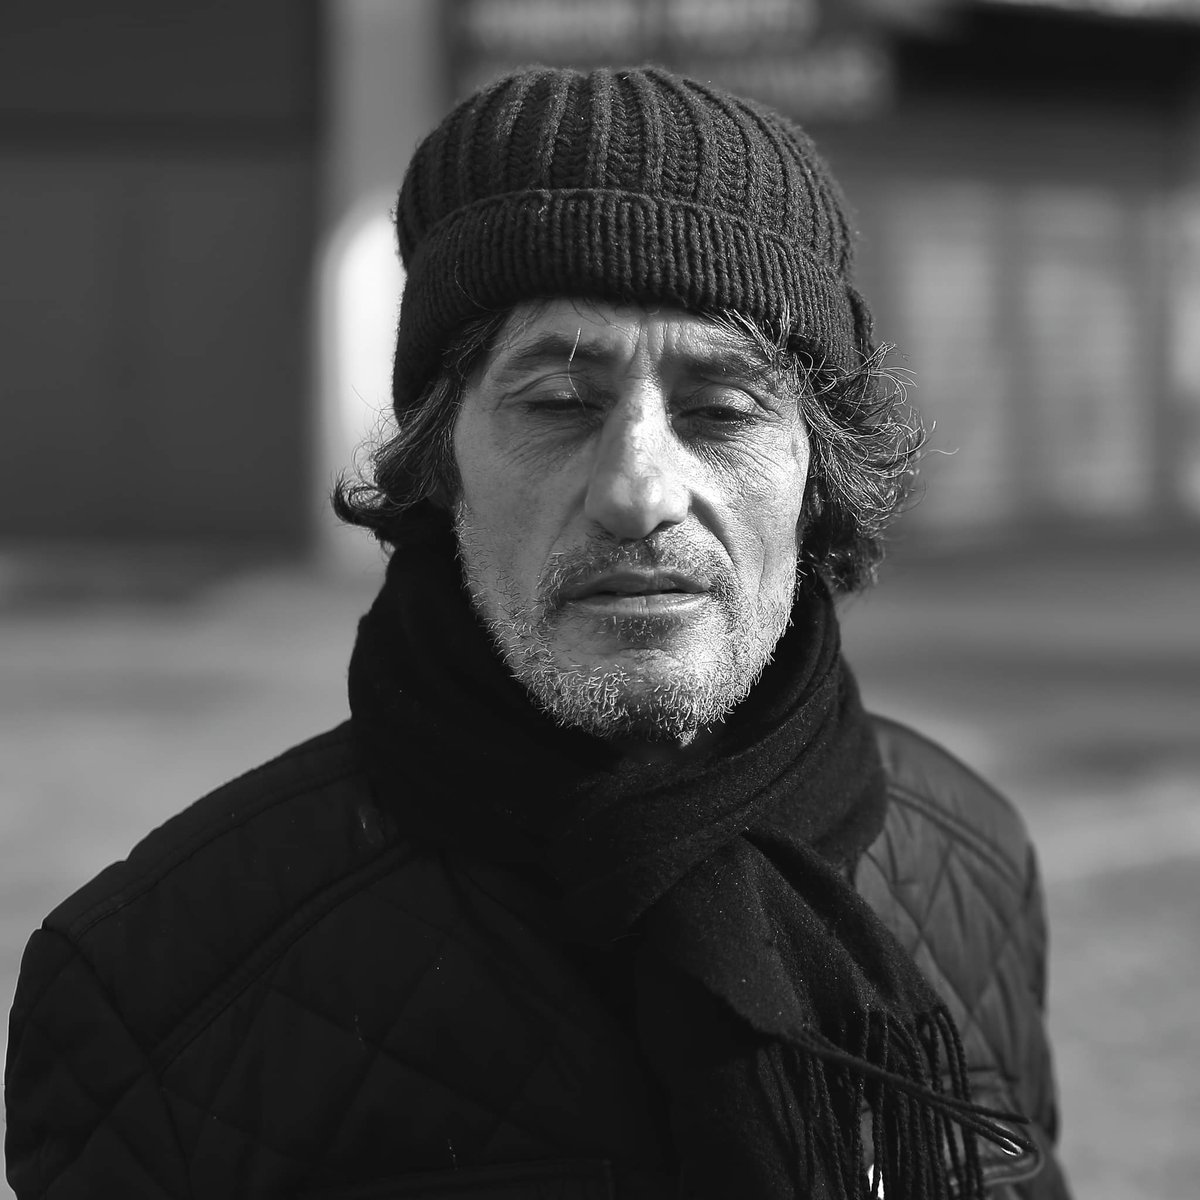 Unknown man portrait #streetphotography #street #blackandwhite #Paris #pascalcolin #canon #50mm